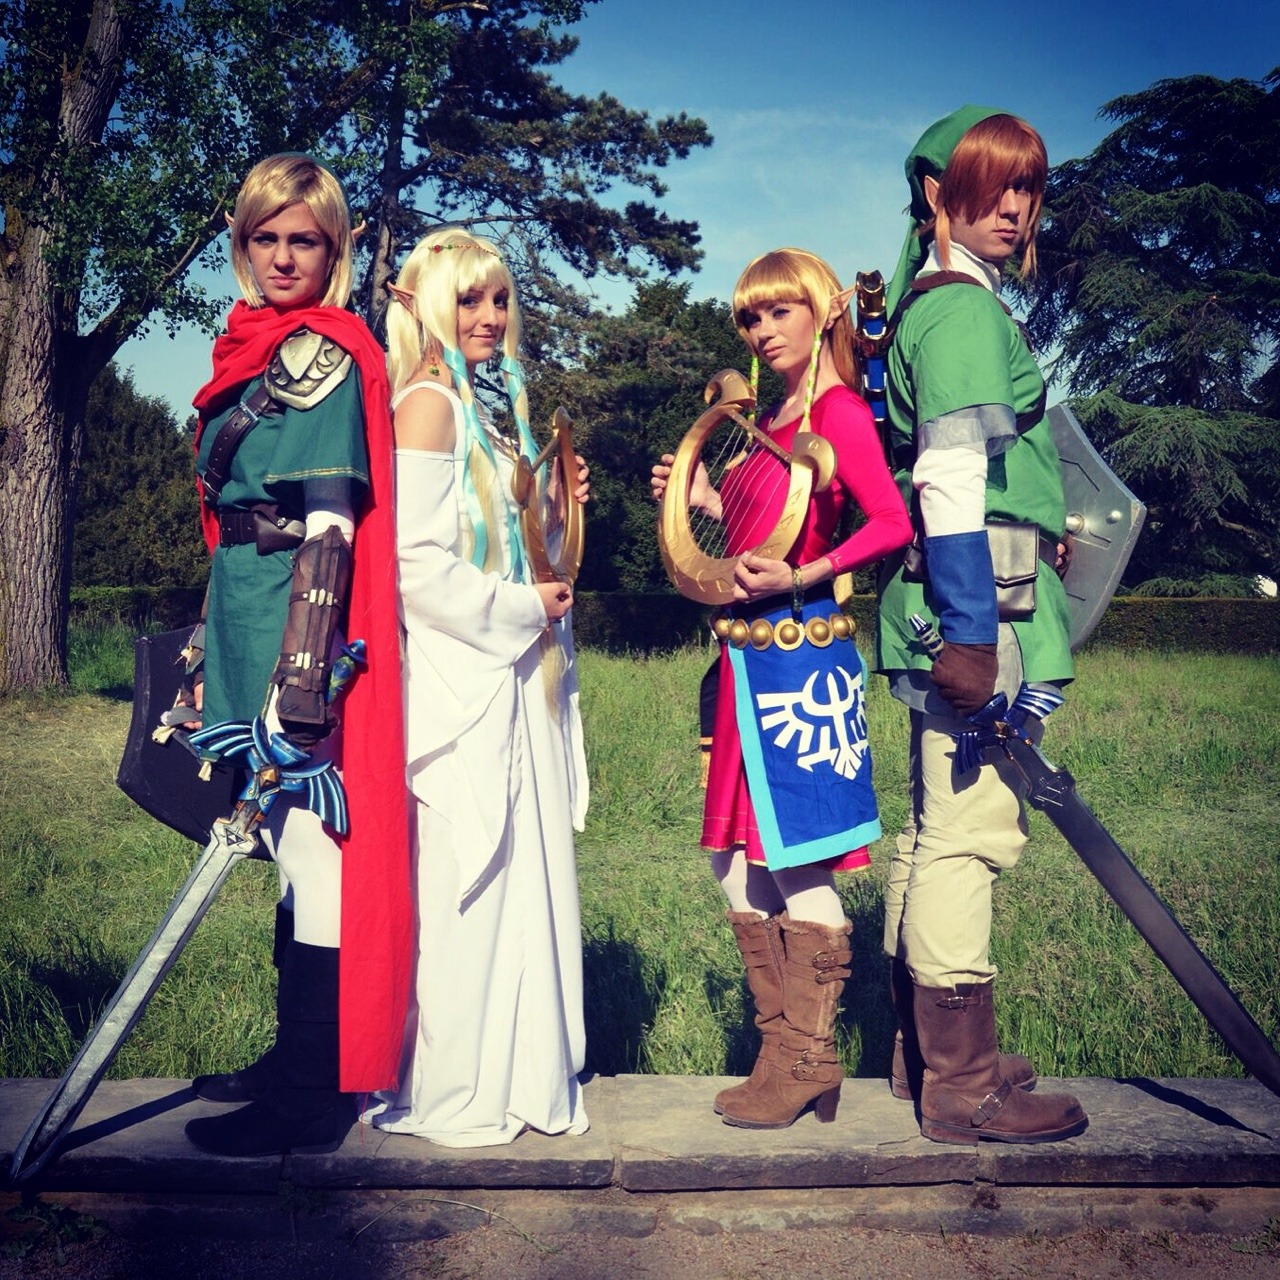 Link & Zelda cosplay at Sci-Fi World – GEEKY GALS